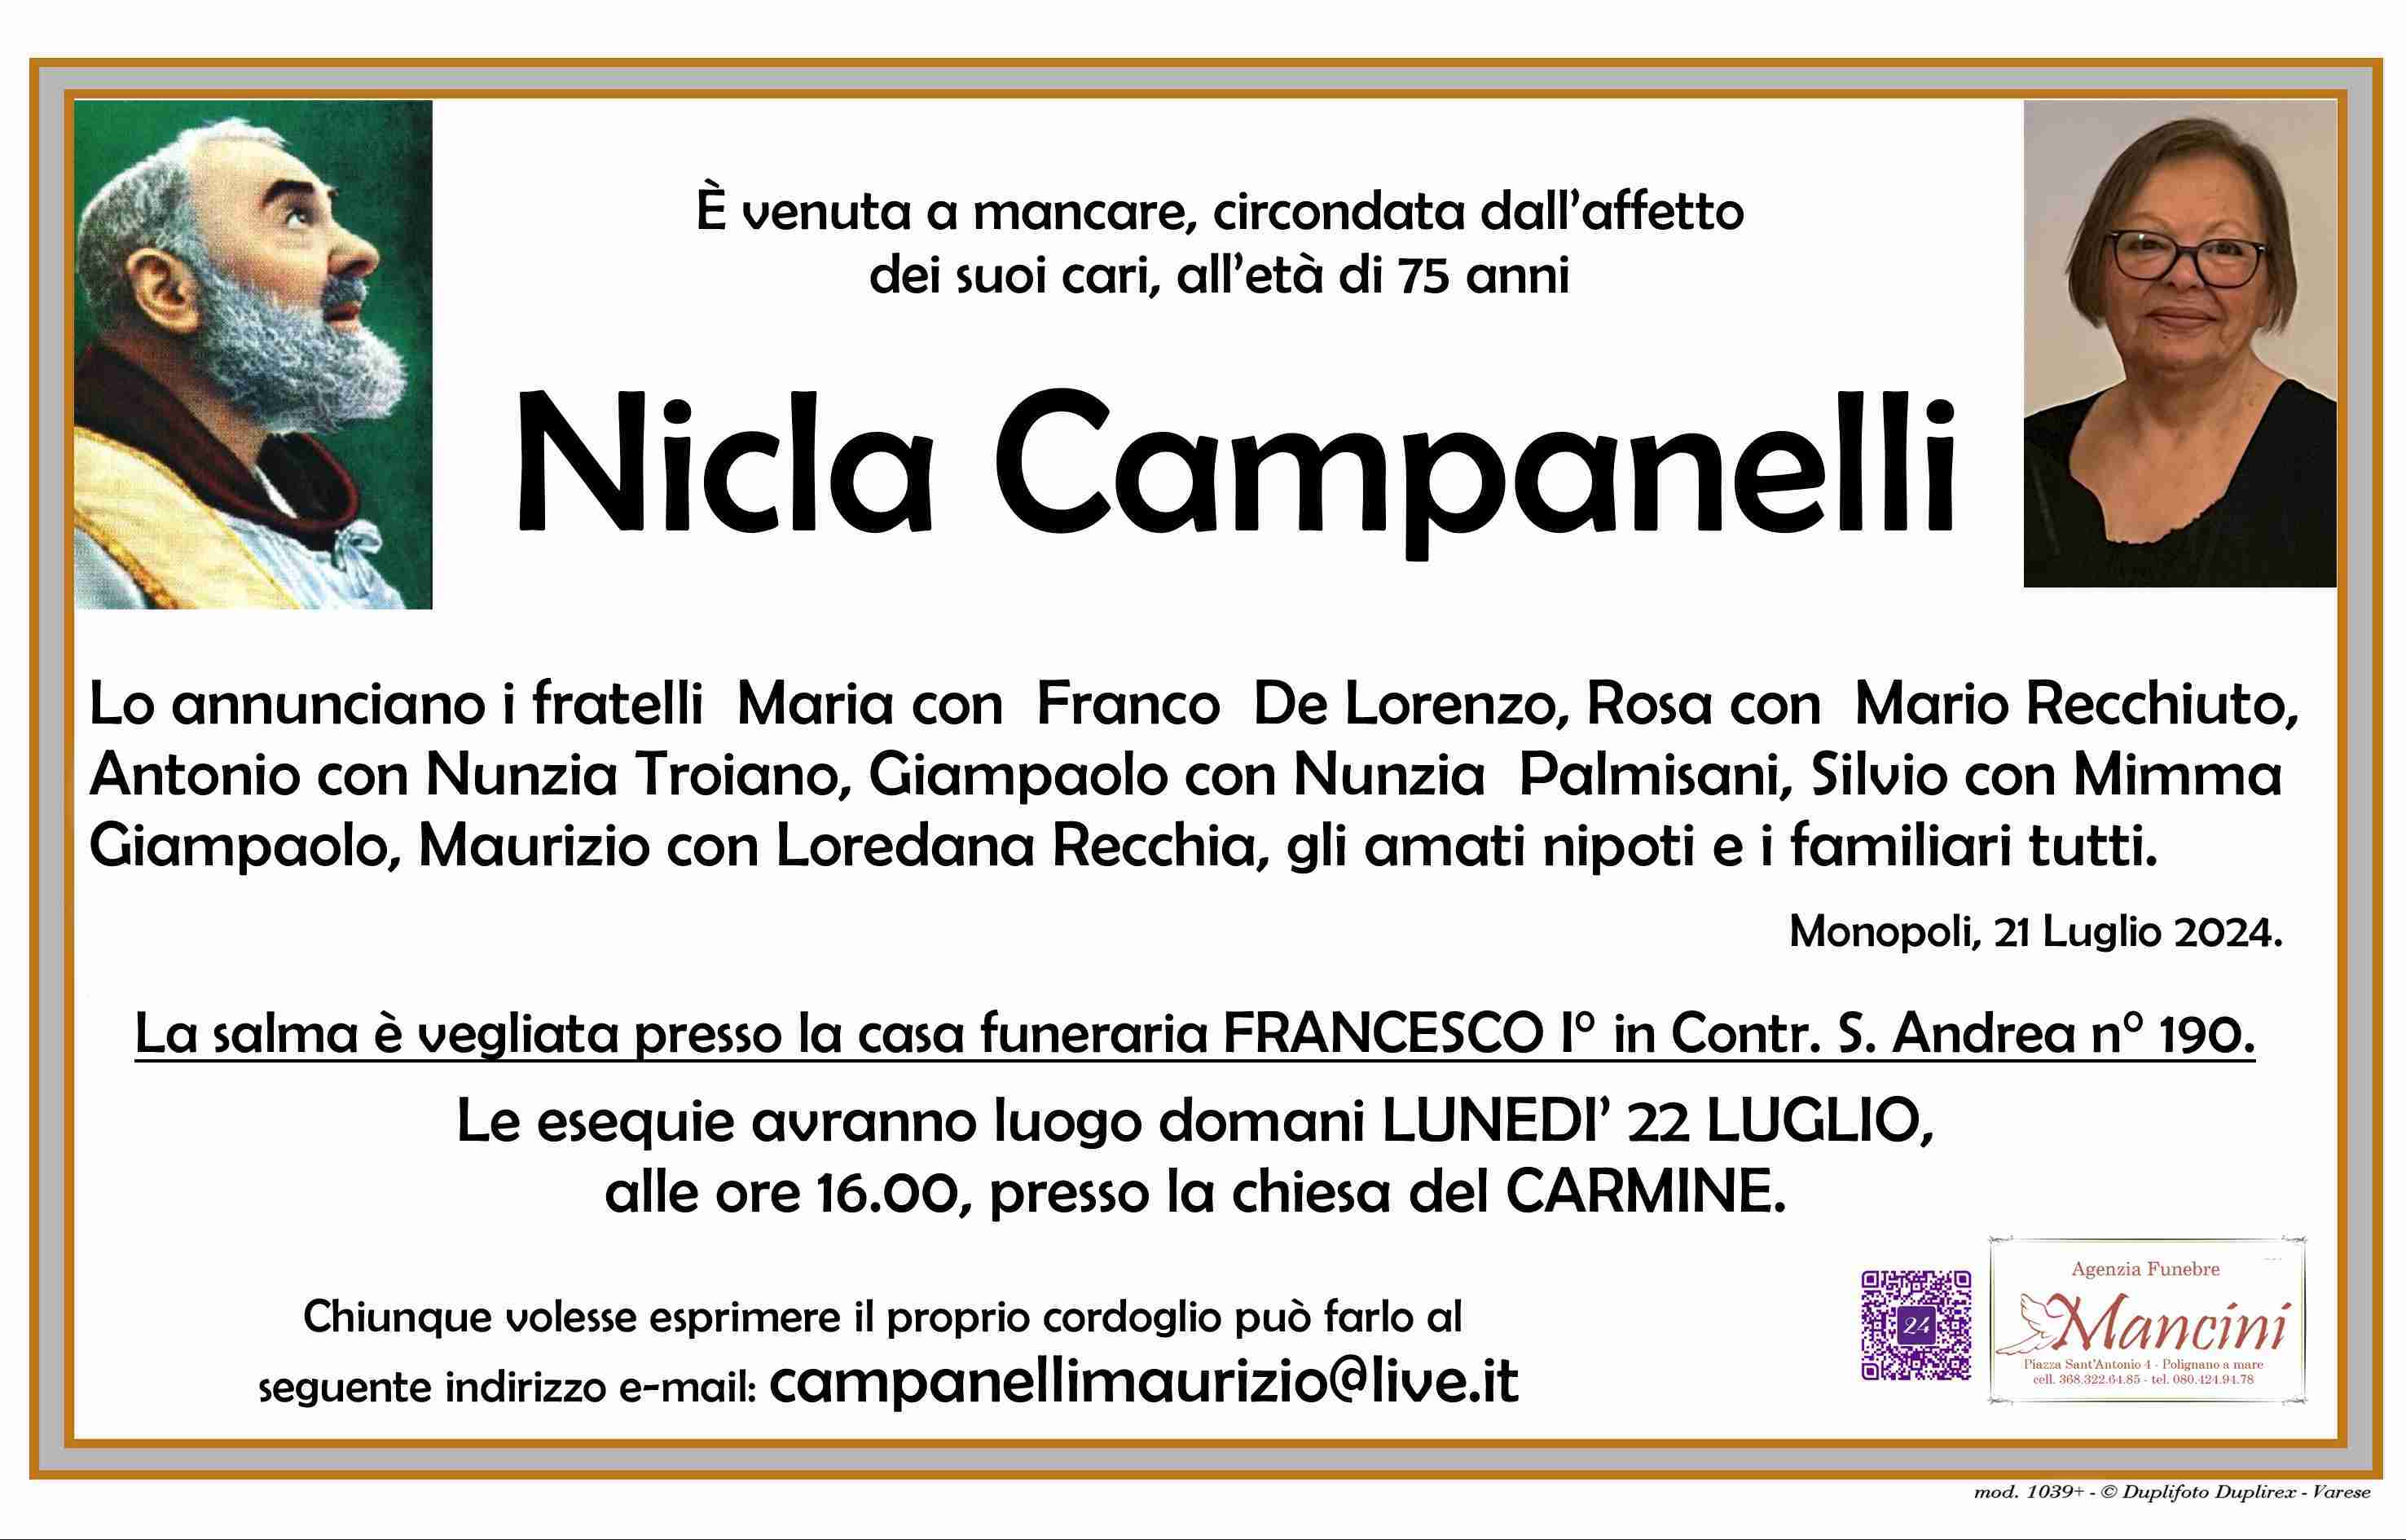 Nicla Campanelli